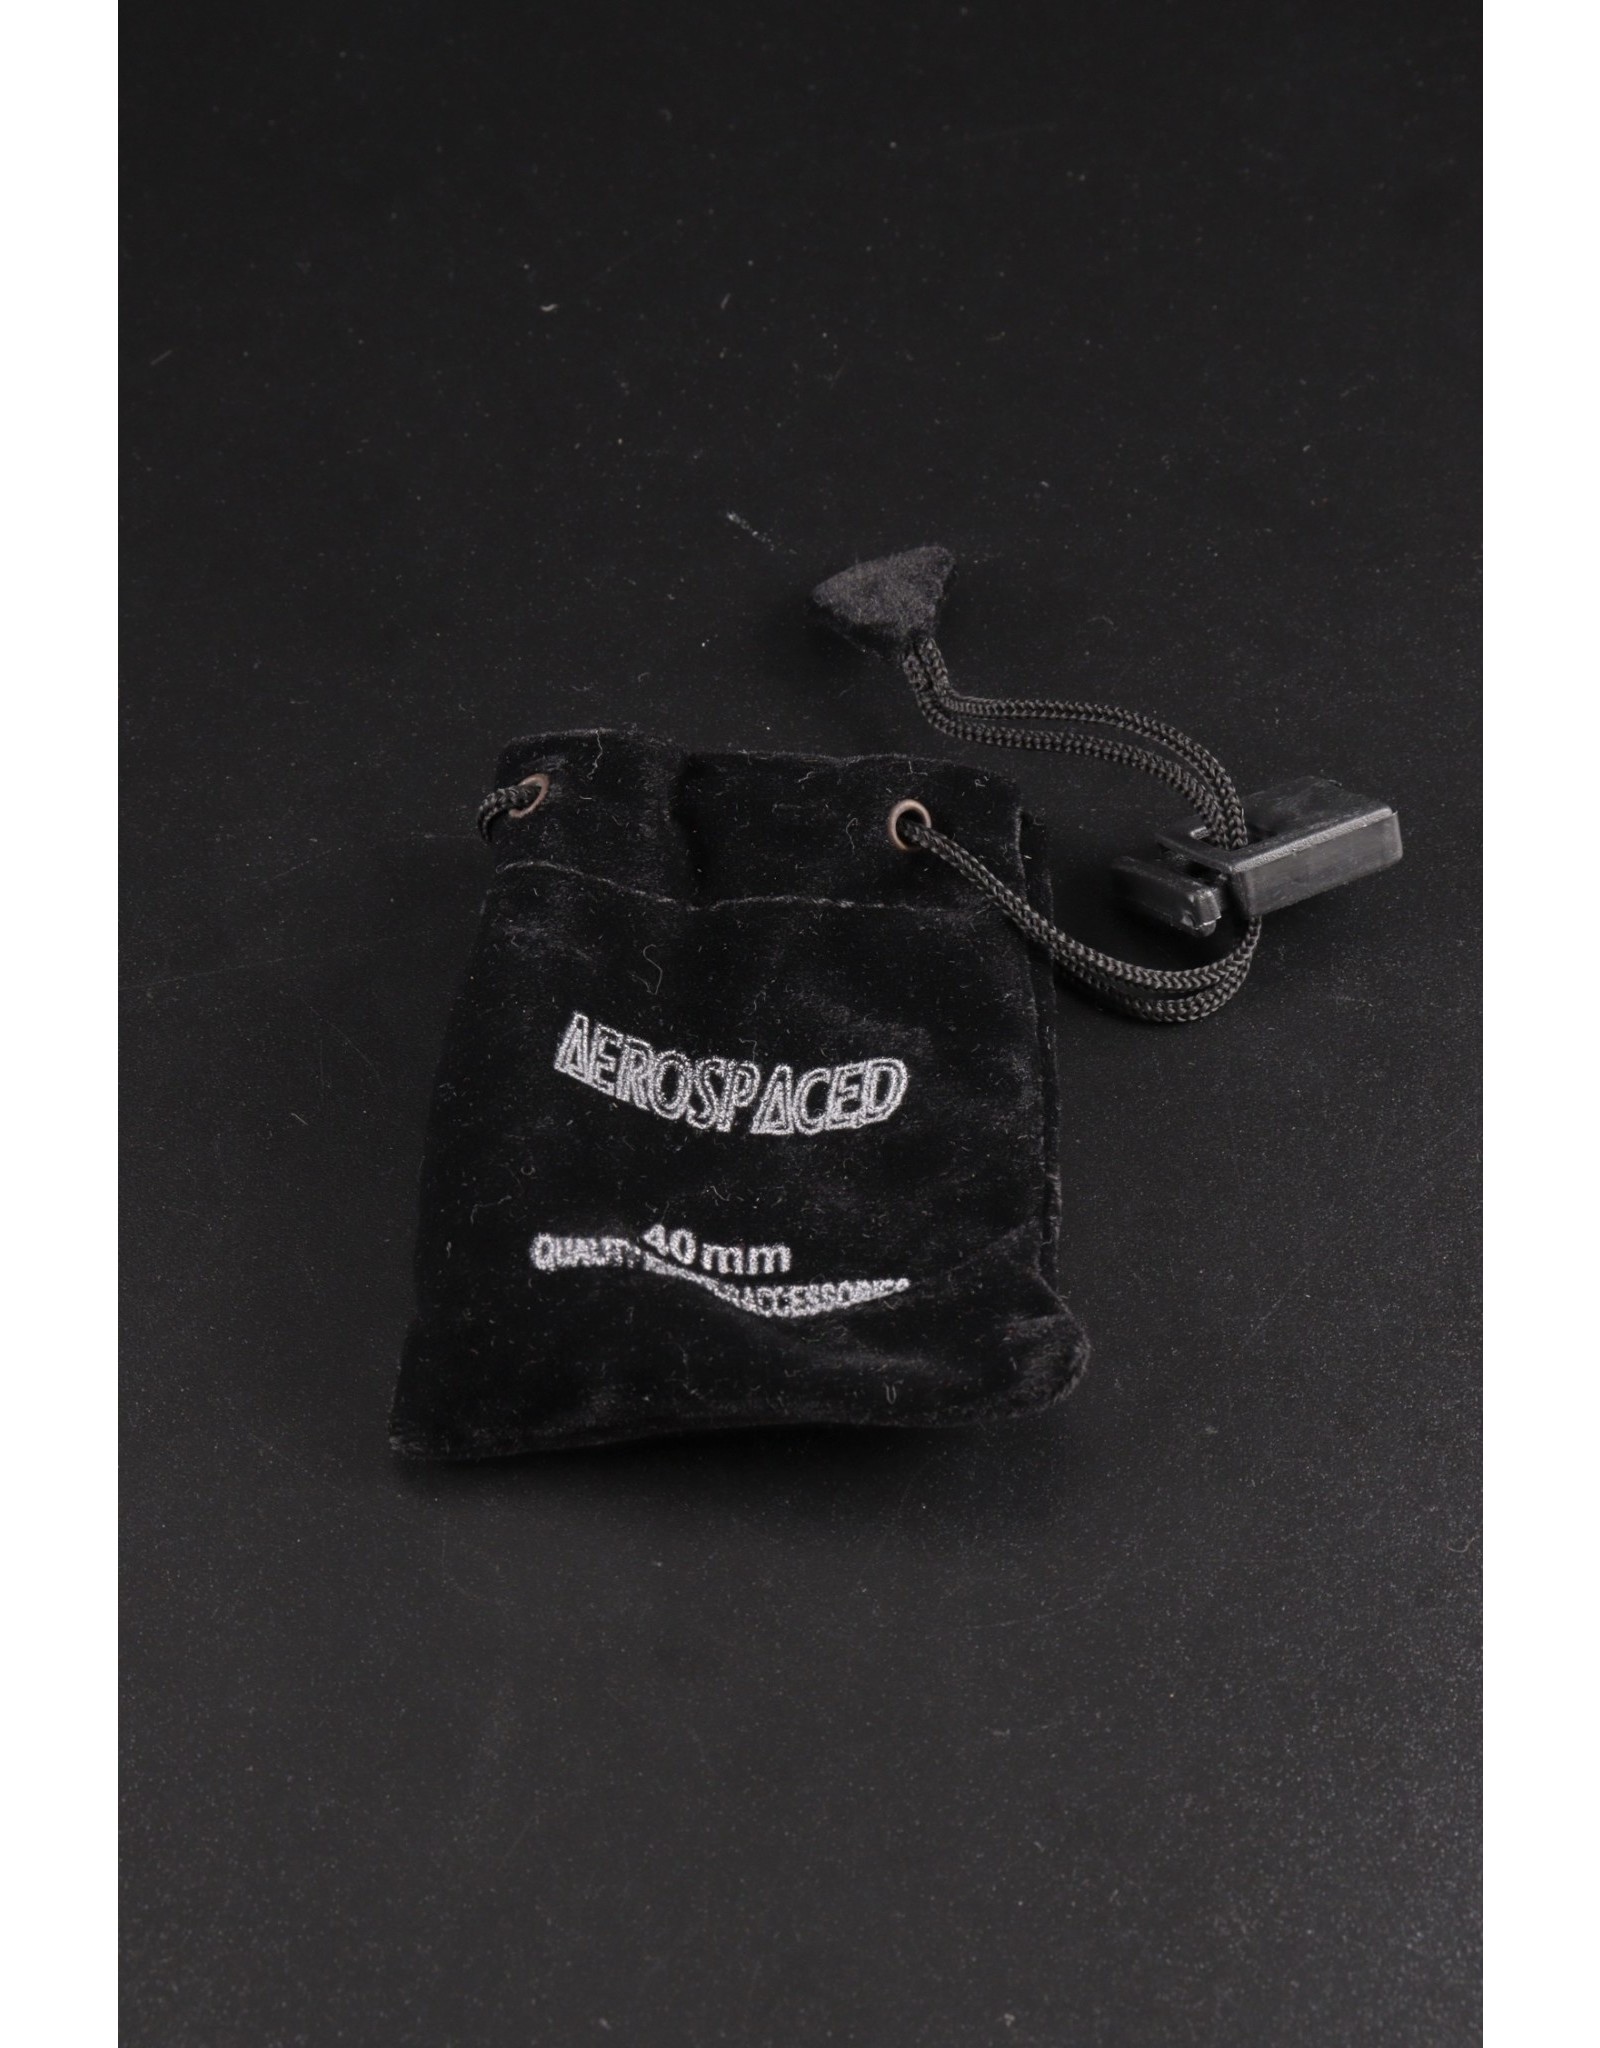 RaGu $1 Bag - small black cloth bag